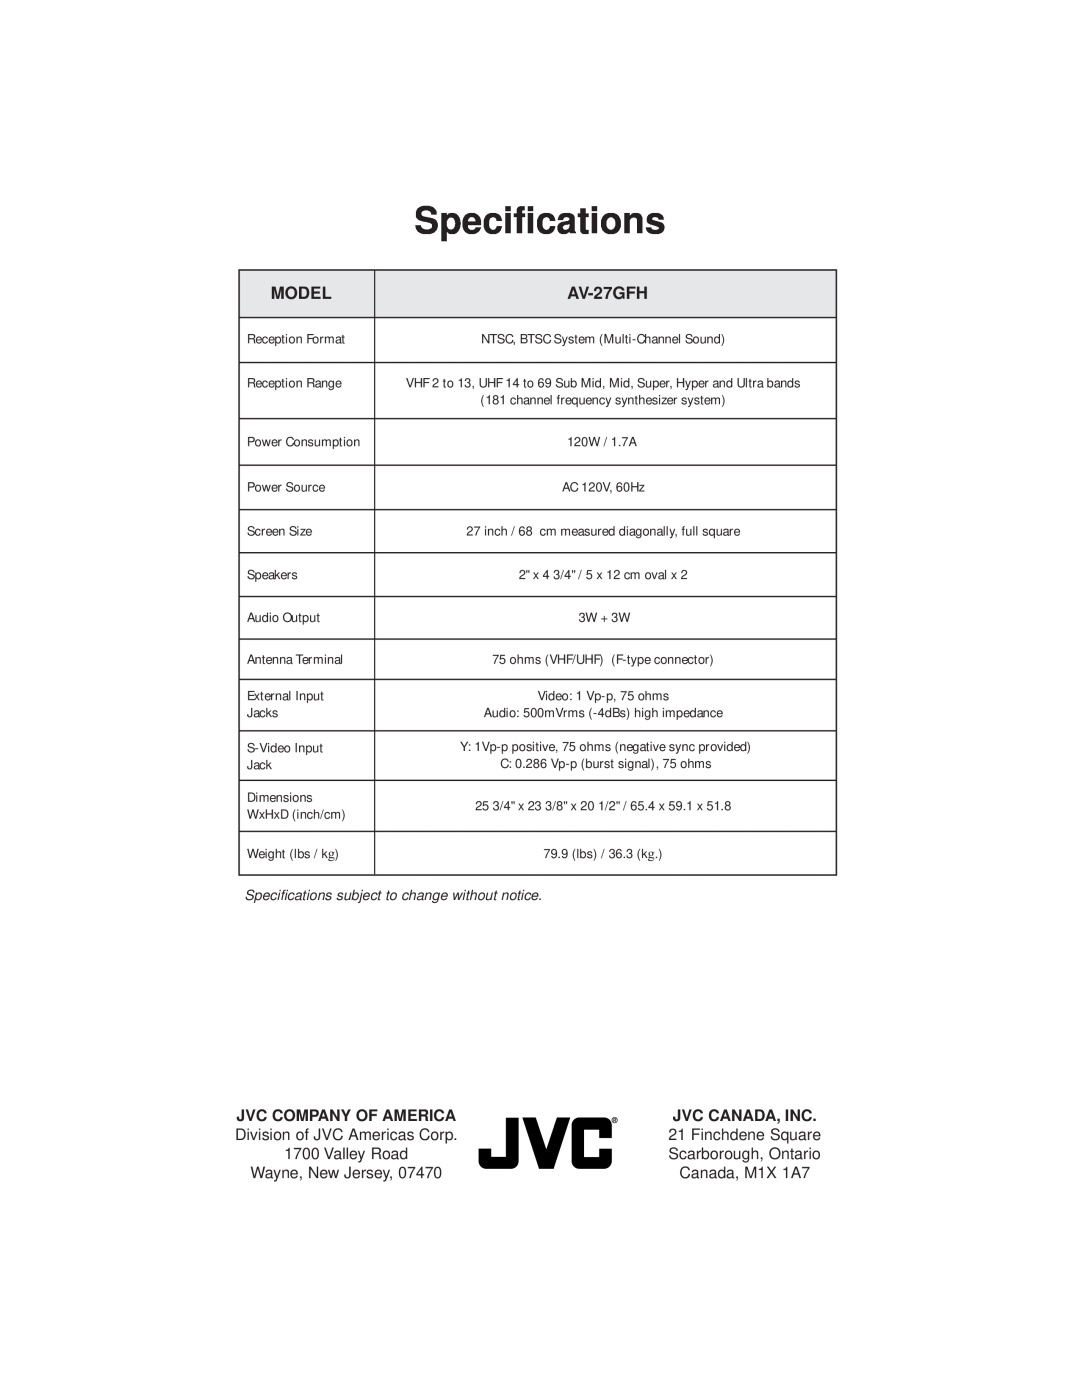 JVC AV-27GFH manual Specifications, Model, Jvc Company Of America, Jvc Canada, Inc 